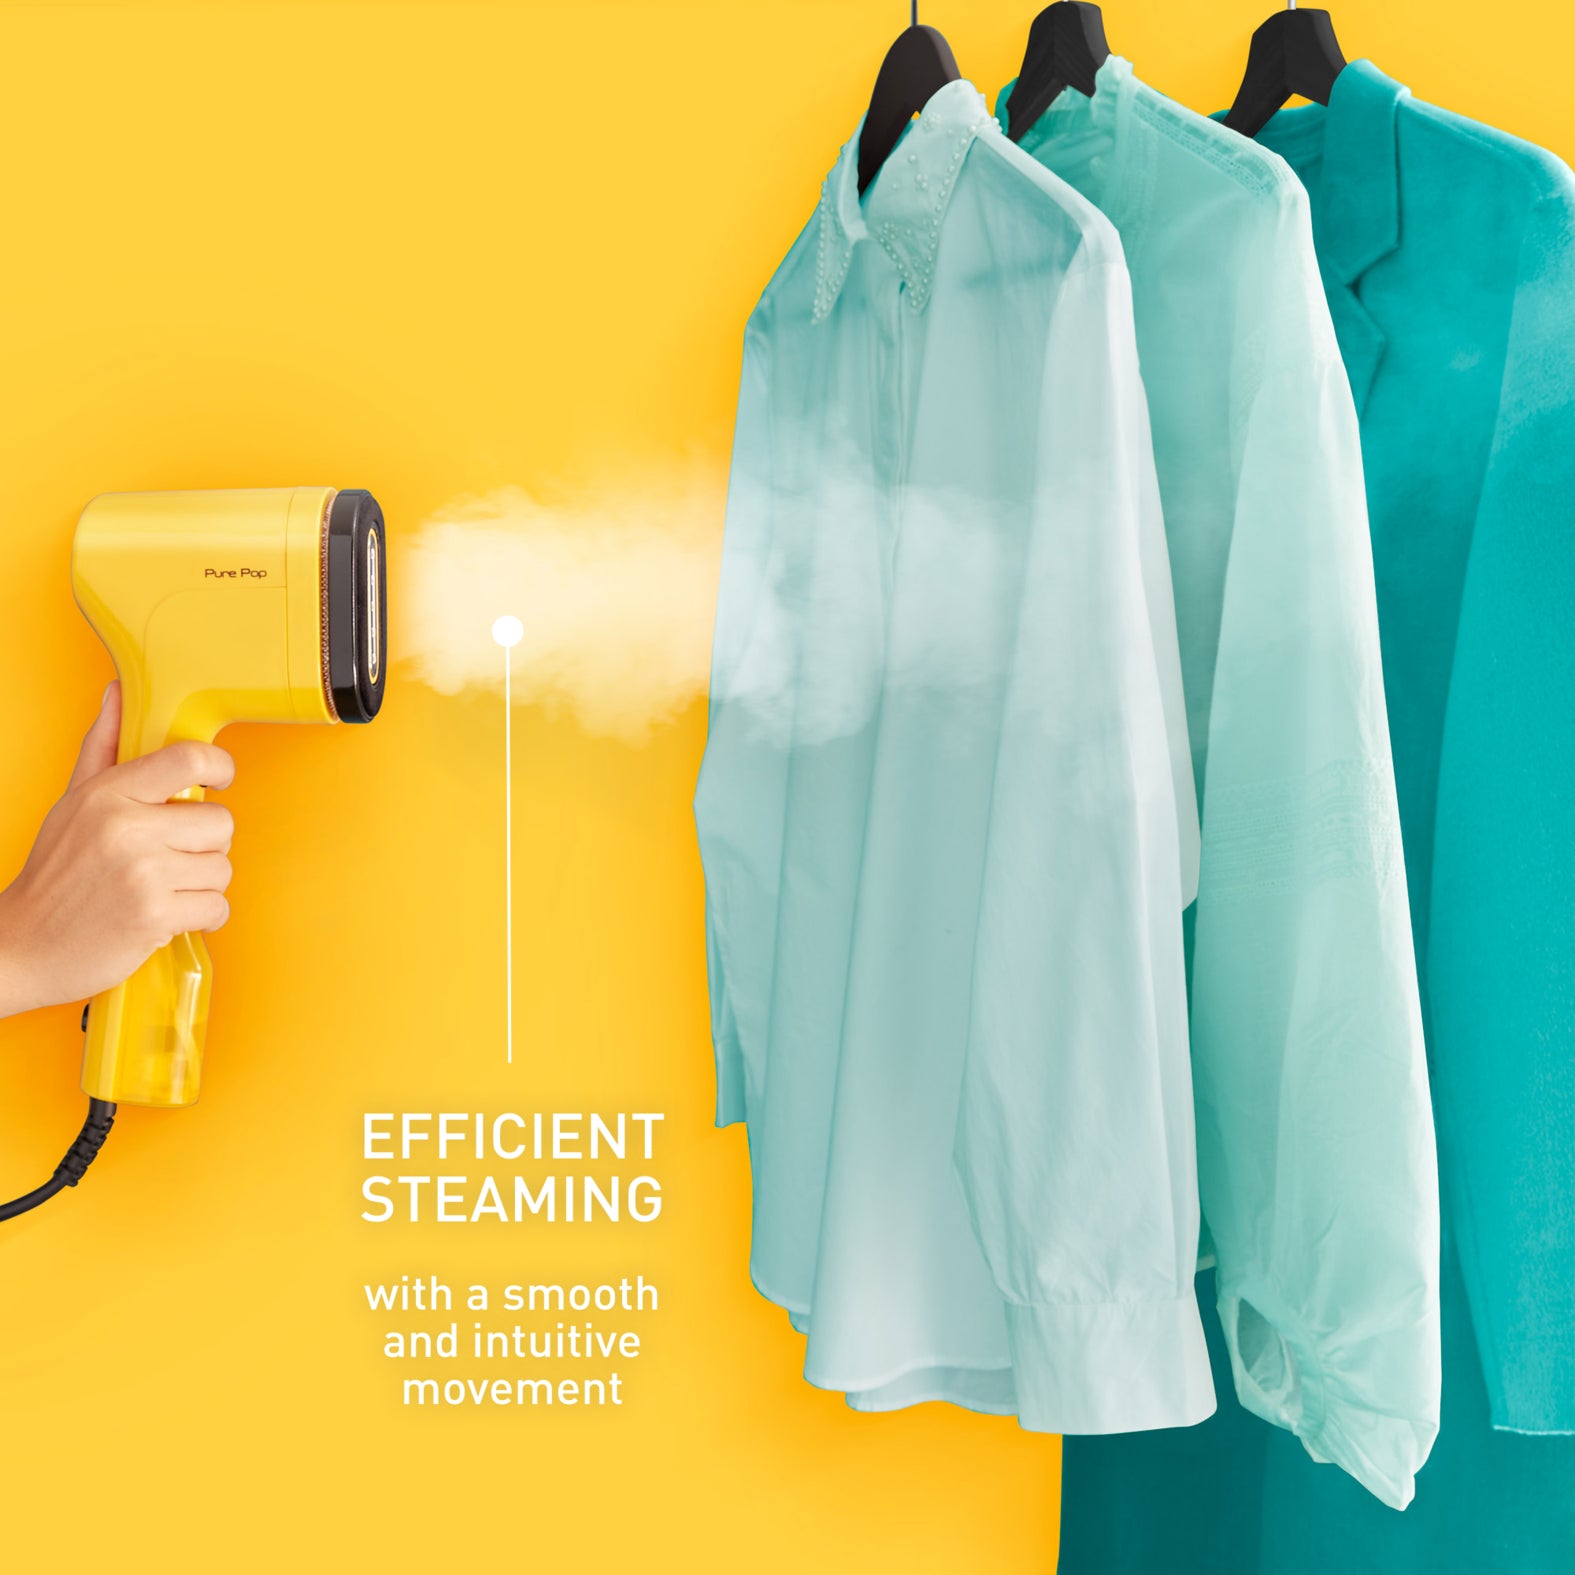 Tefal Pure Pop Handheld Garment Steamer DT2026 - Sunshine Yellow